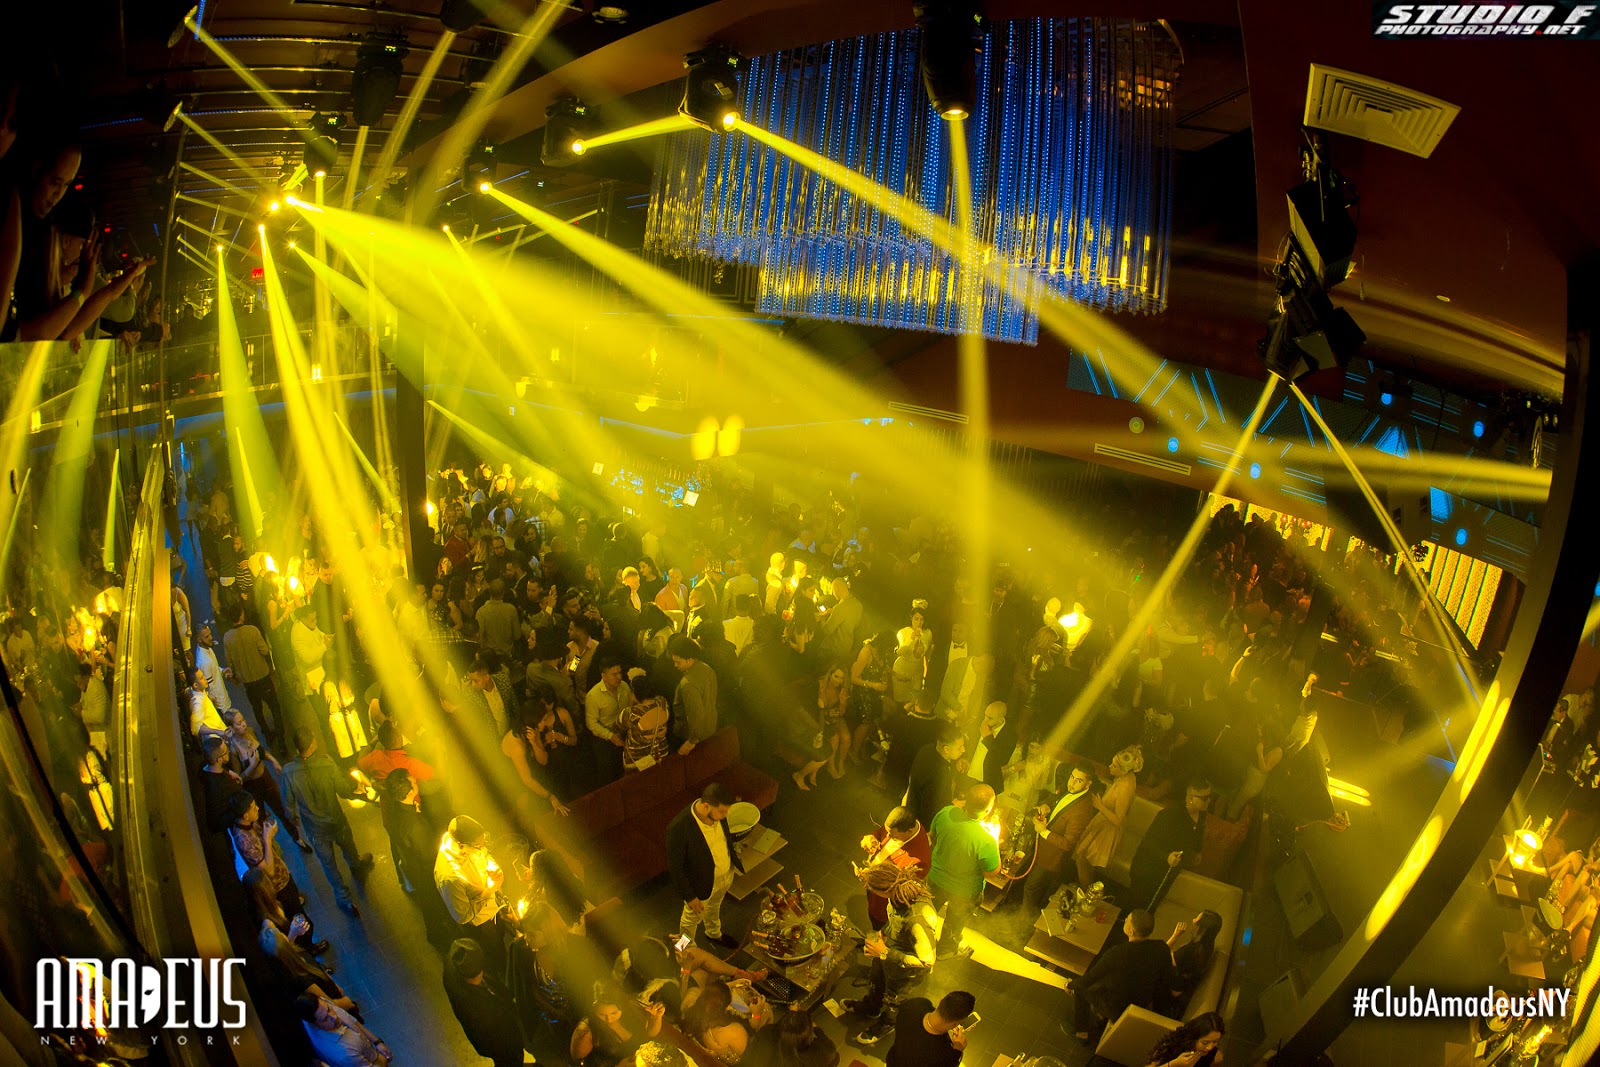 Photo of Amadeus NightClub in New York City, New York, United States - 1 Picture of Point of interest, Establishment, Night club